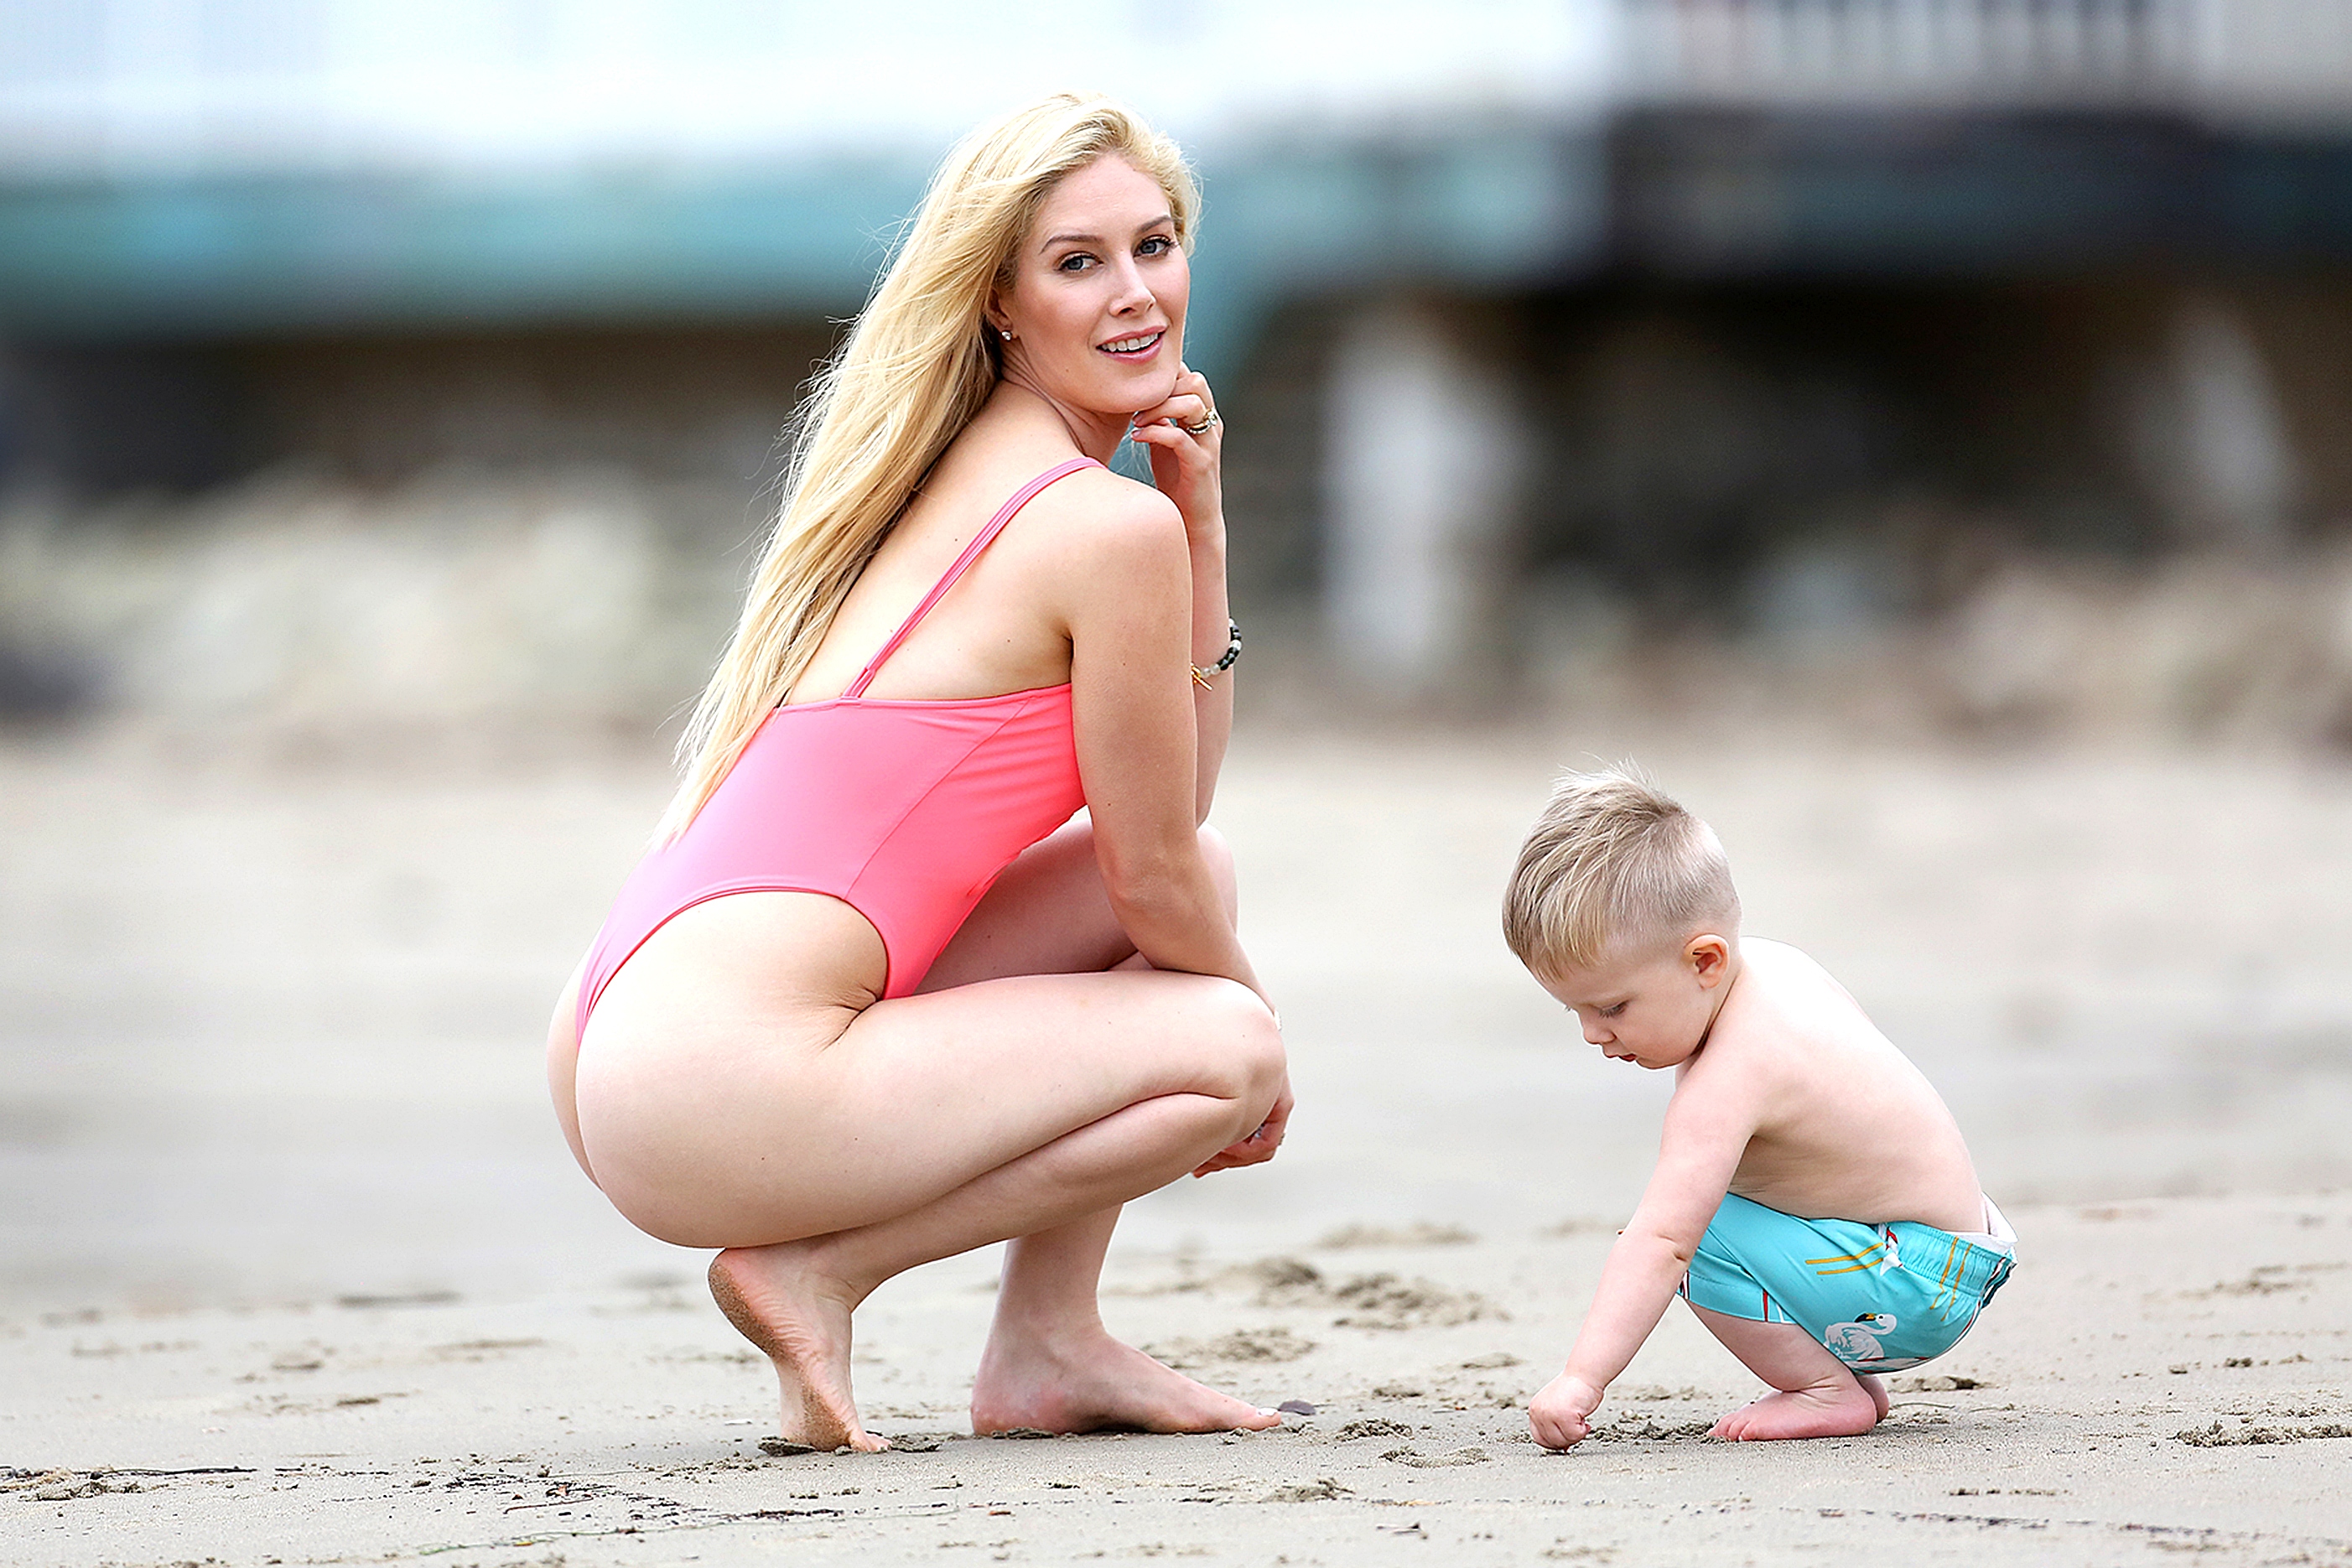 Heidi Montag Hairy Pussy - Heidi Montag Shows Off Killer Body During Family Beach Trip: Pics